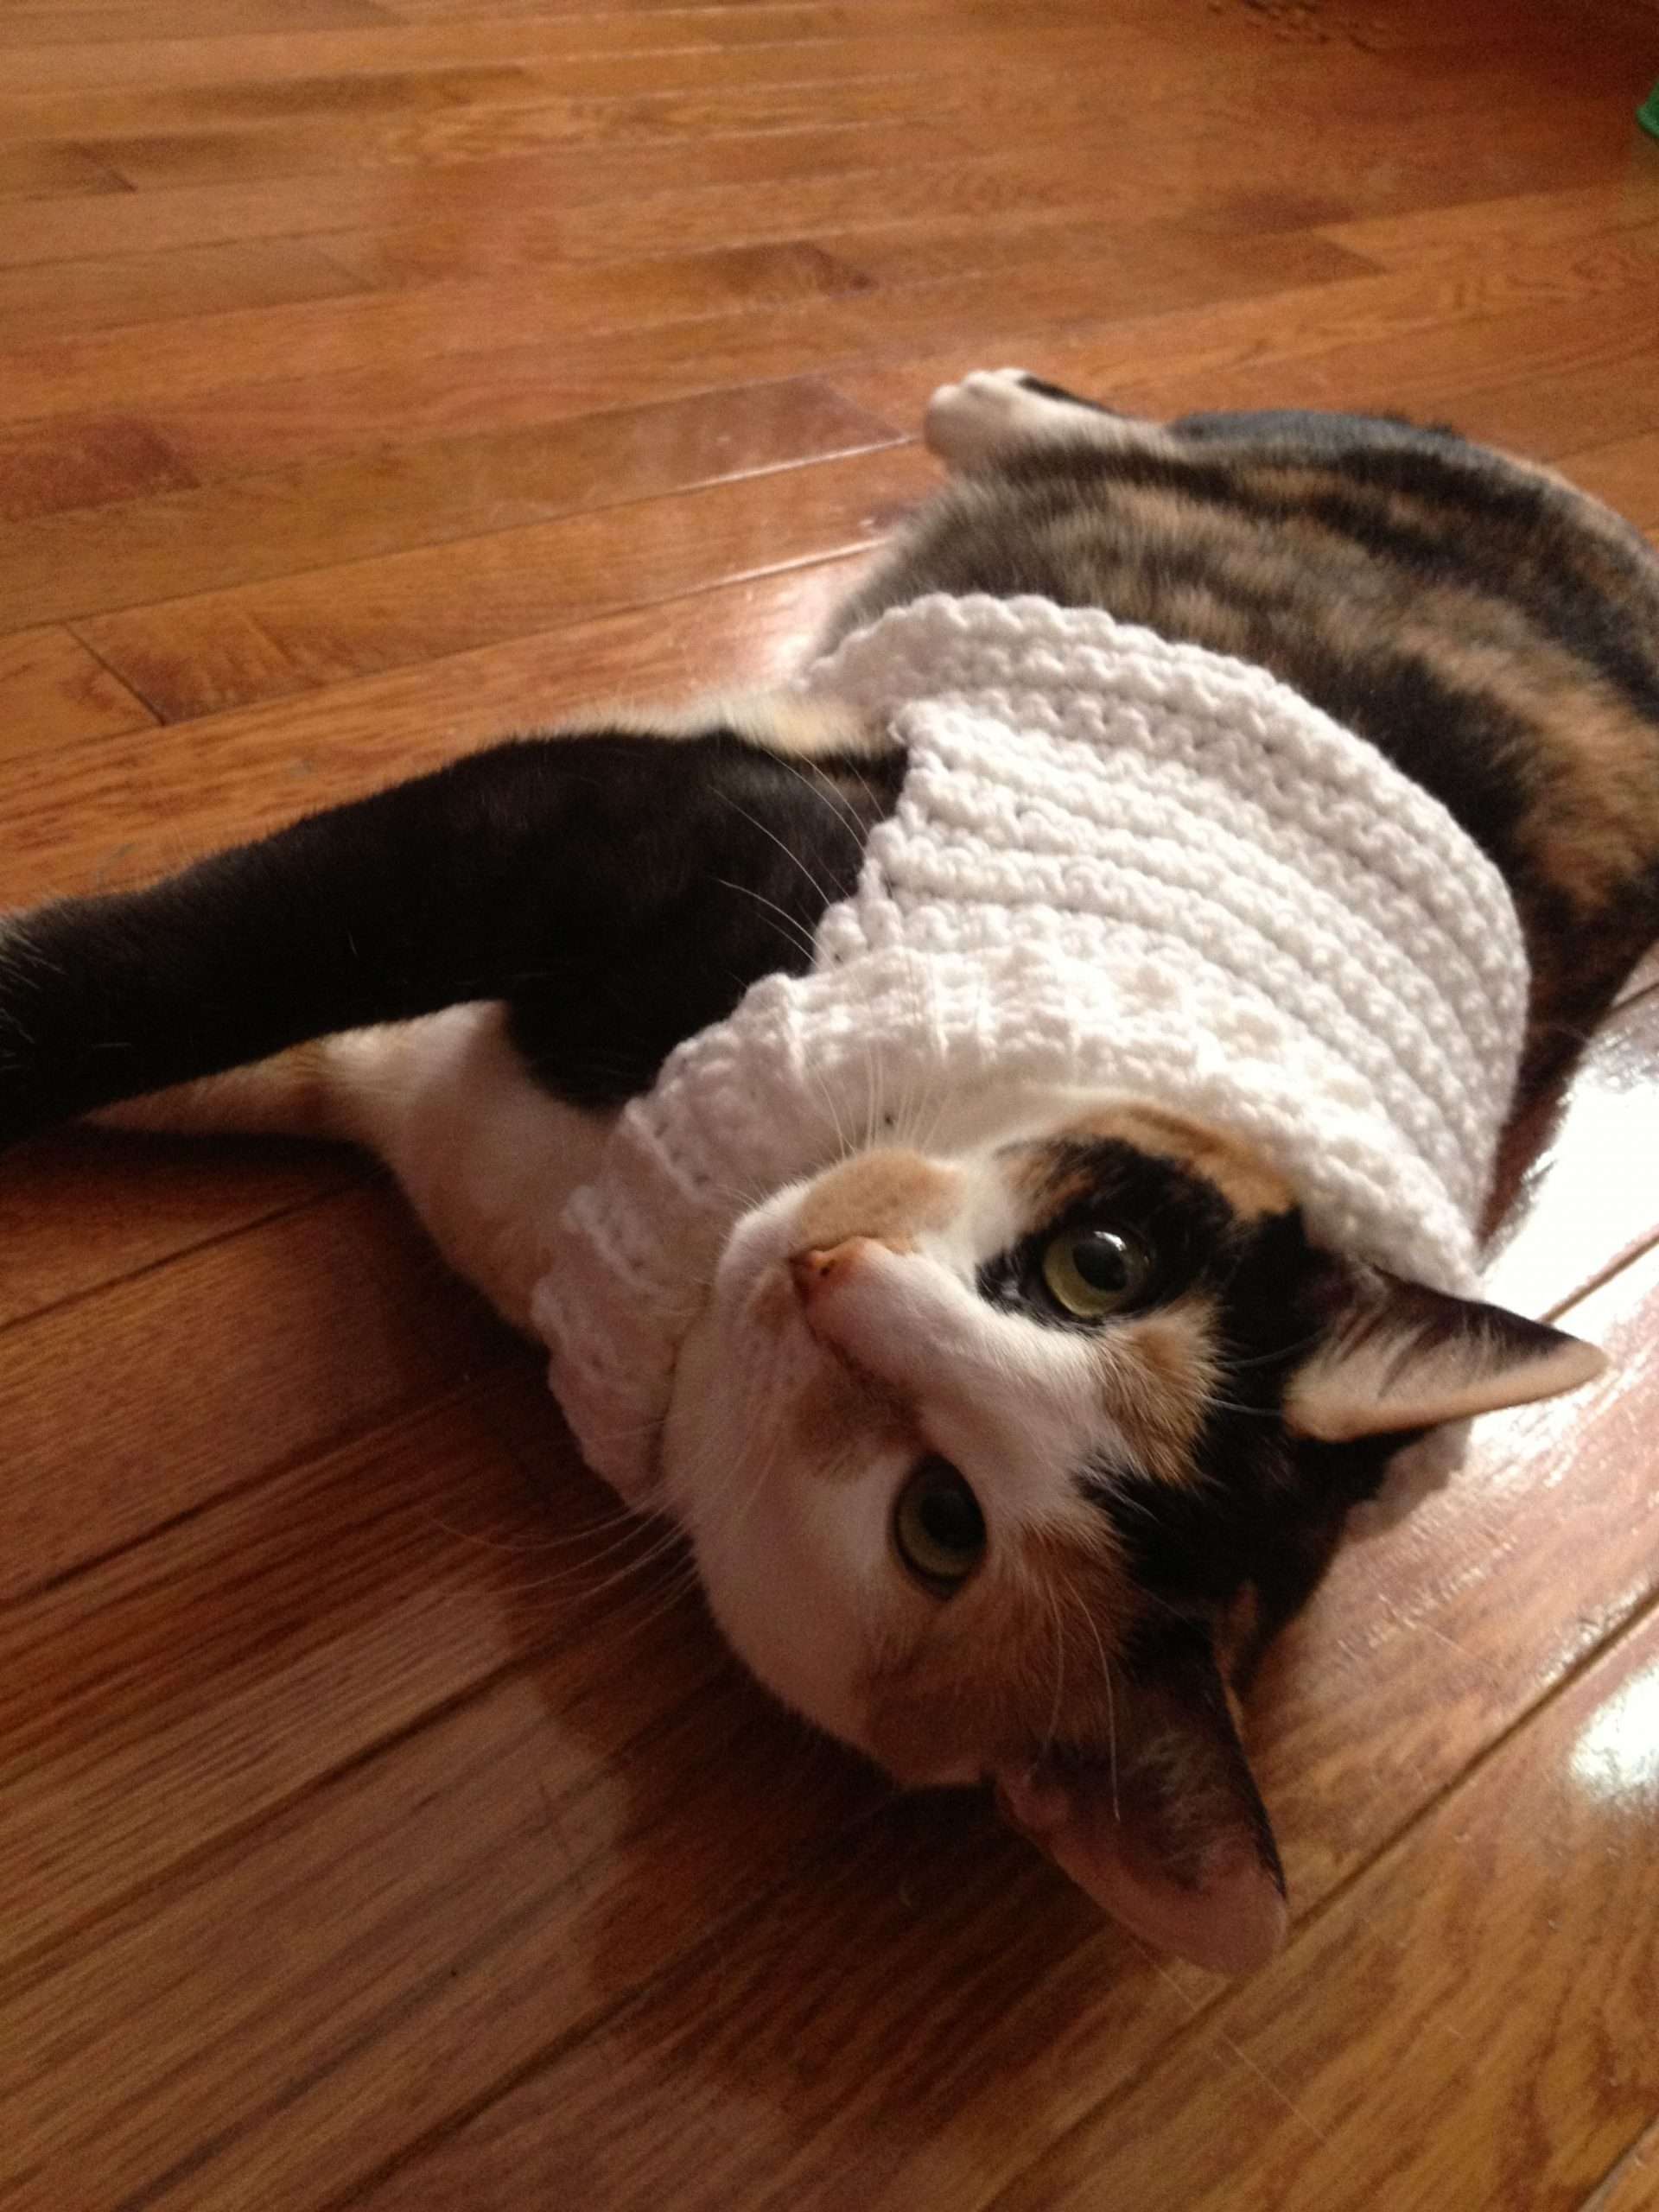 Crocheted cat sweater